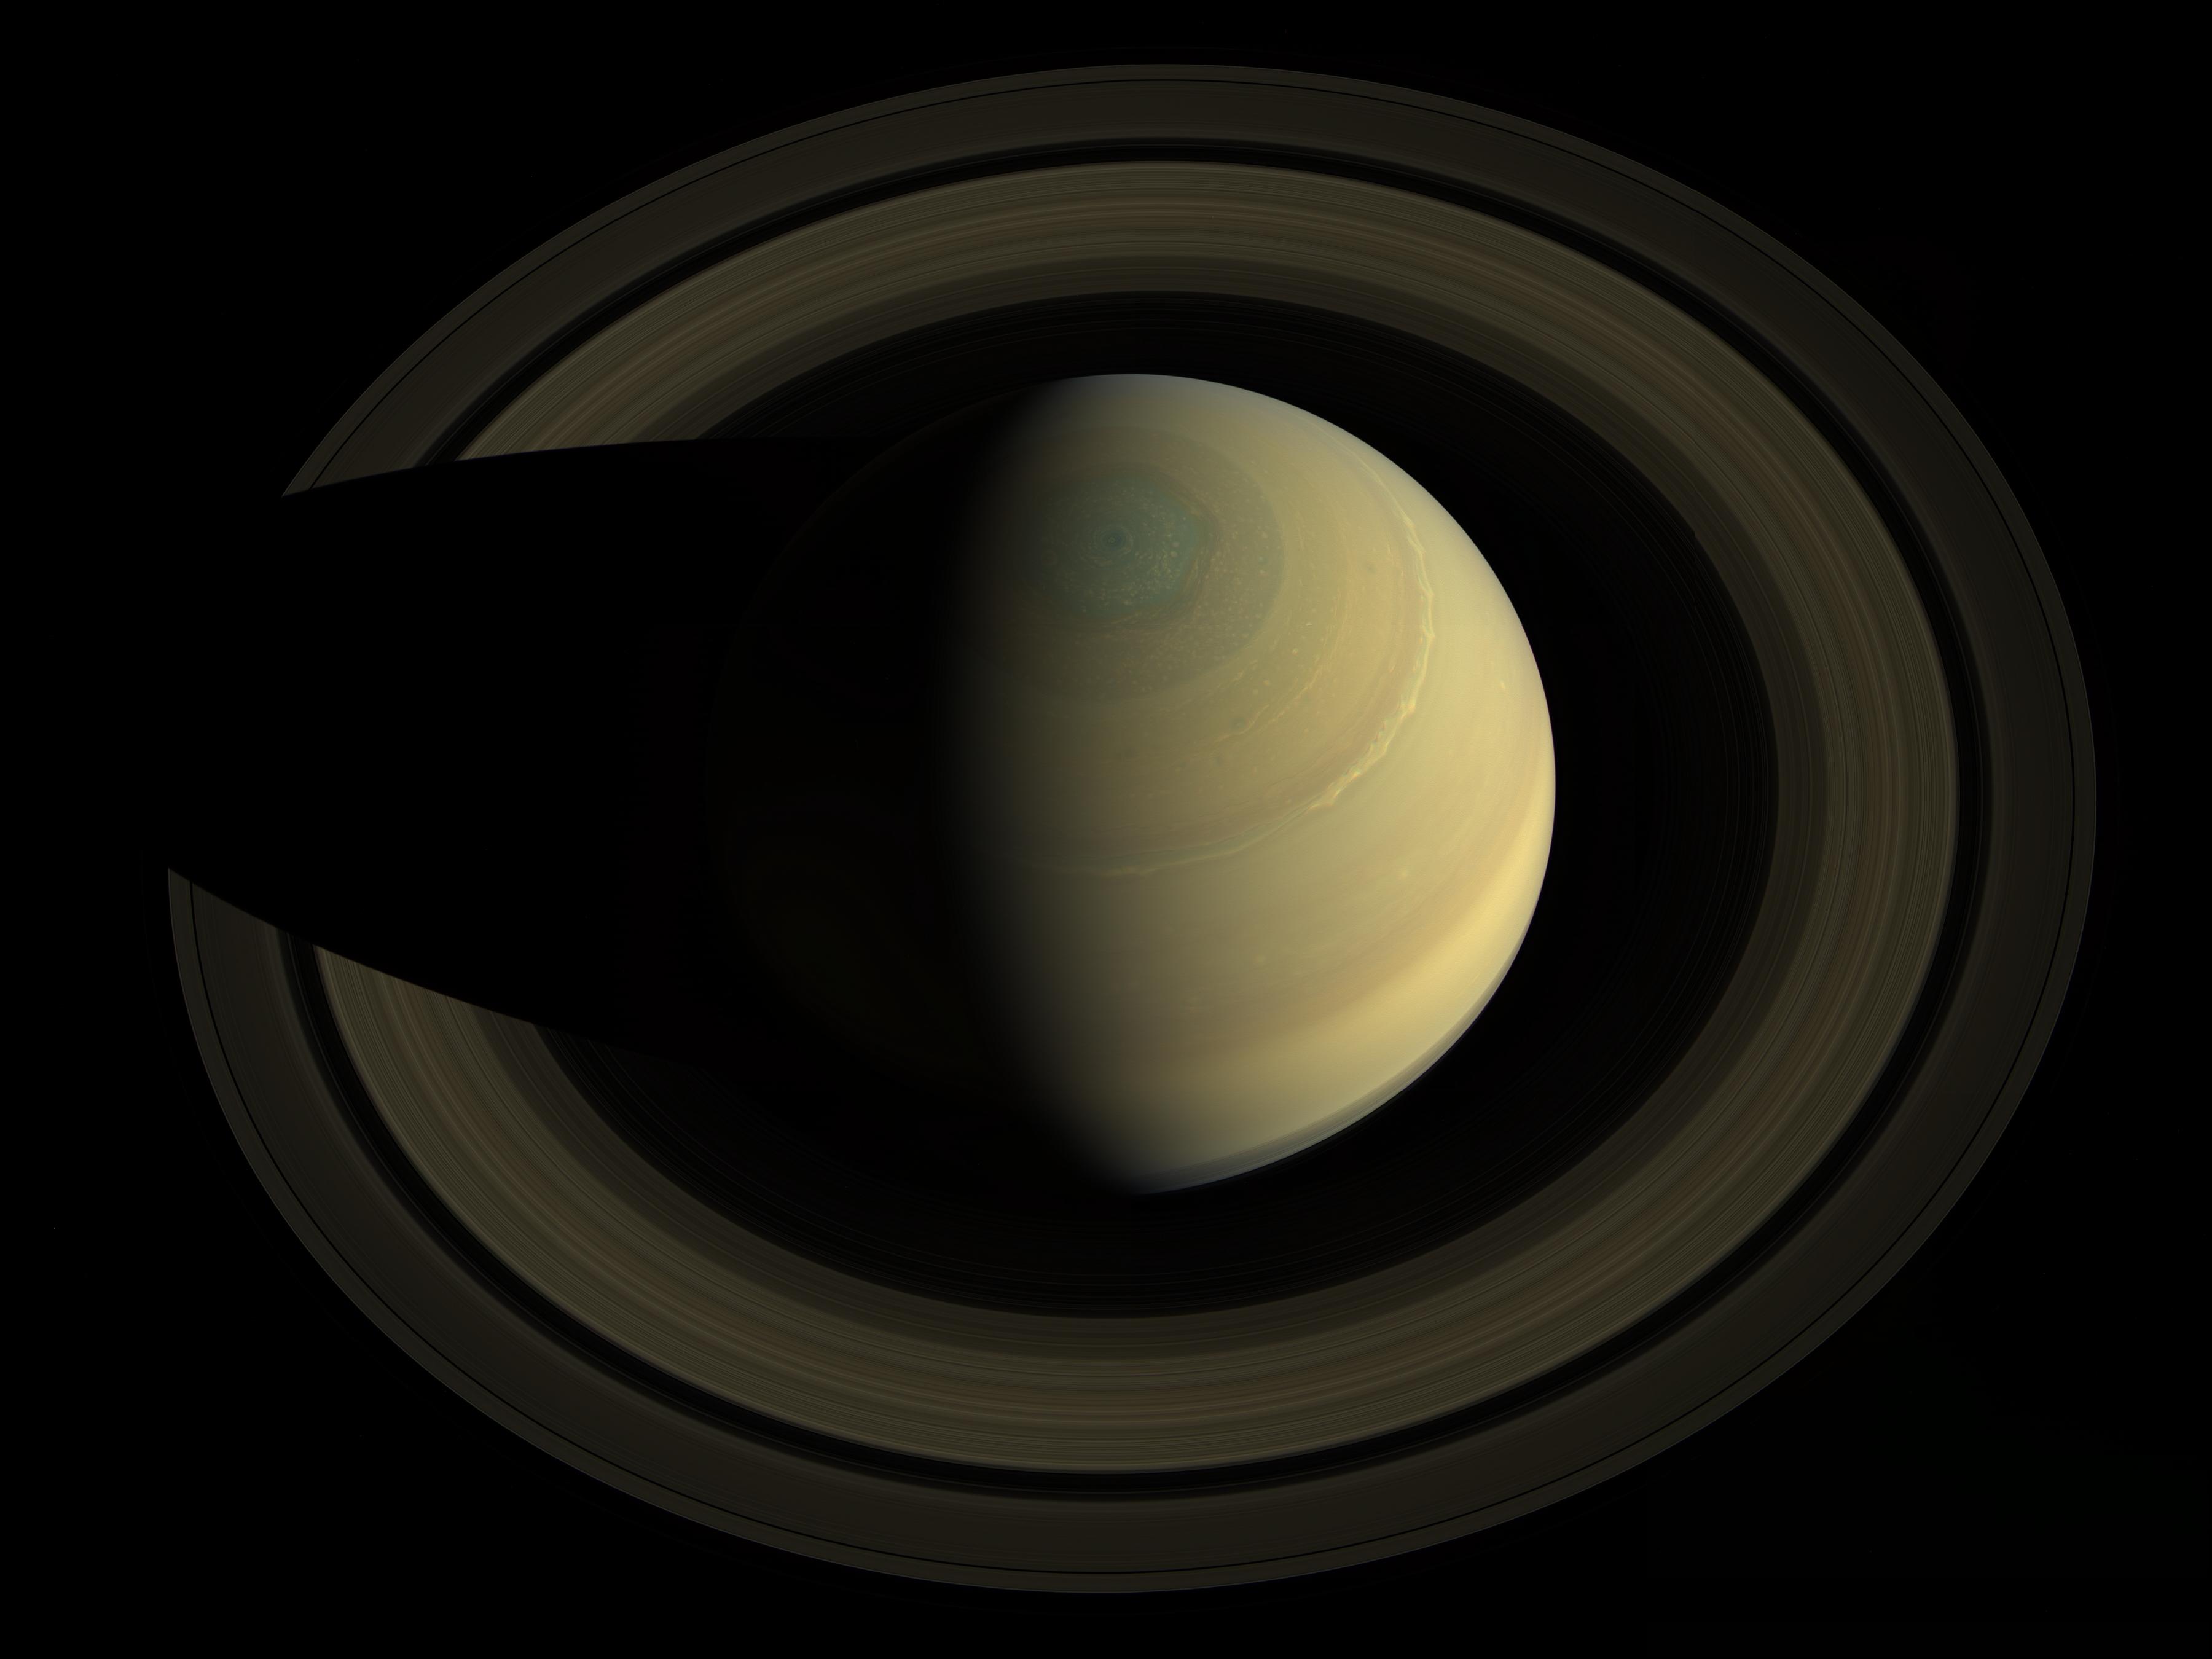 3600x2700, 283 Kb / Кассини, Сатурн